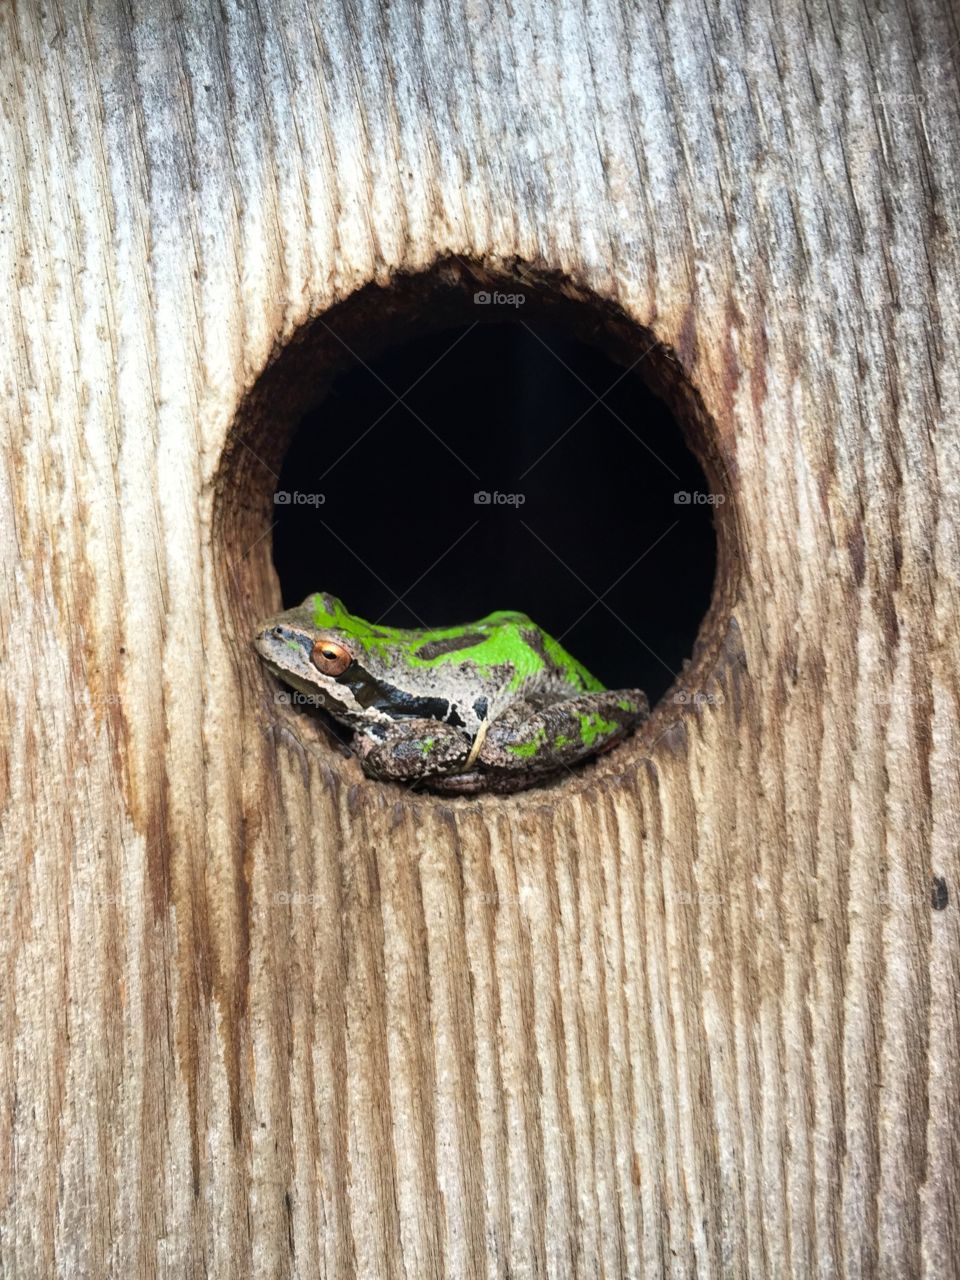 Frog In A Hole. Frog sitting in bird feeder